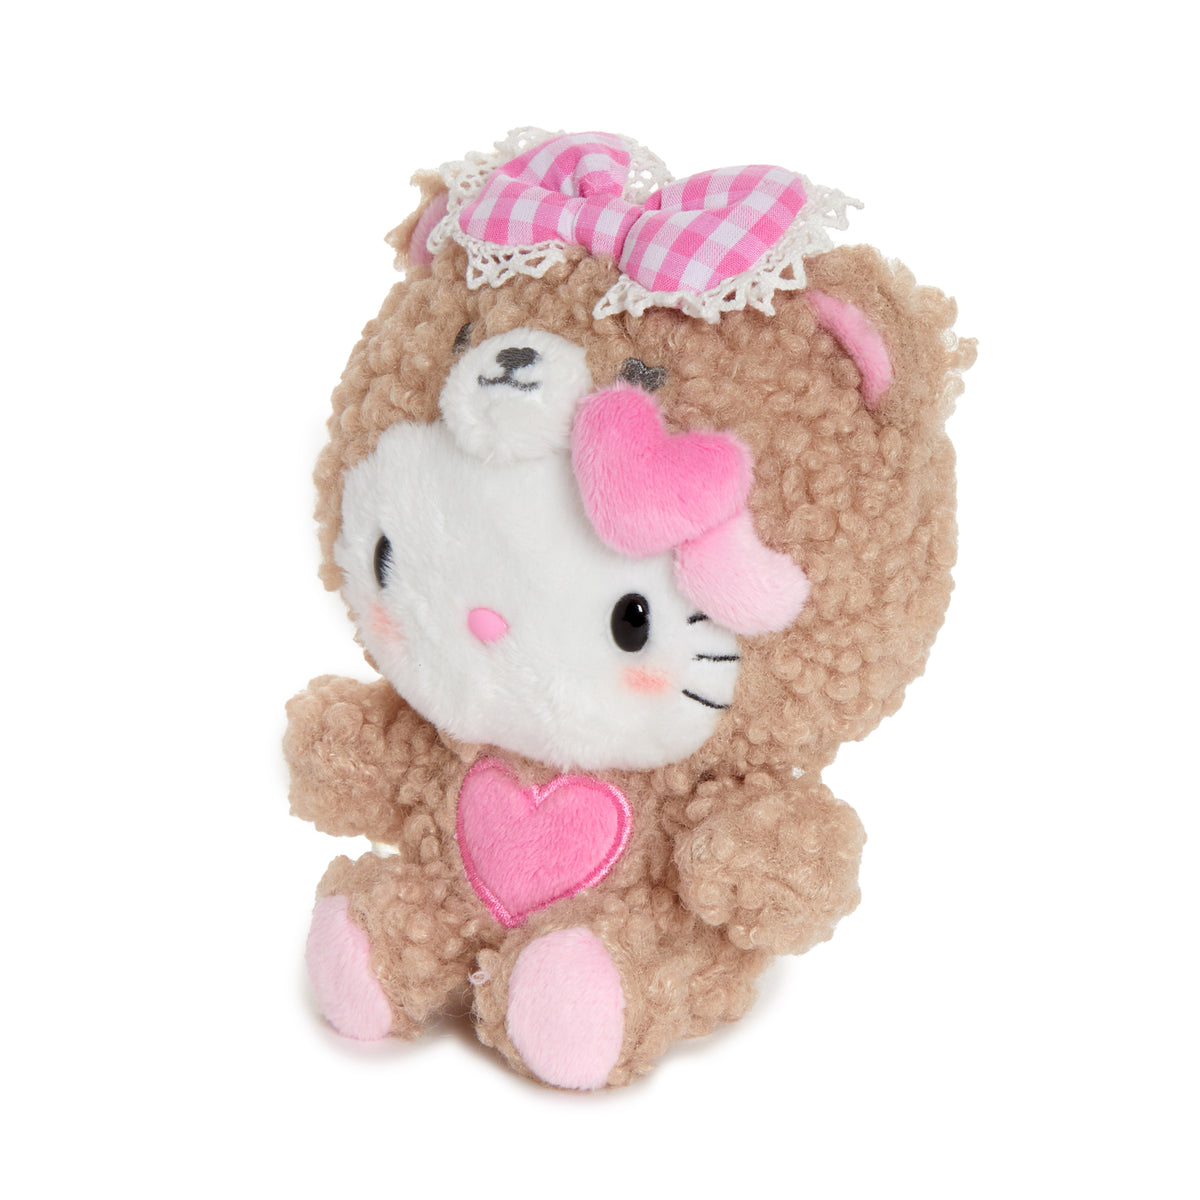 Hello Kitty Teddy Bear Brown Plush Mascot (In Love Series) Plush NAKAJIMA CORPORATION   